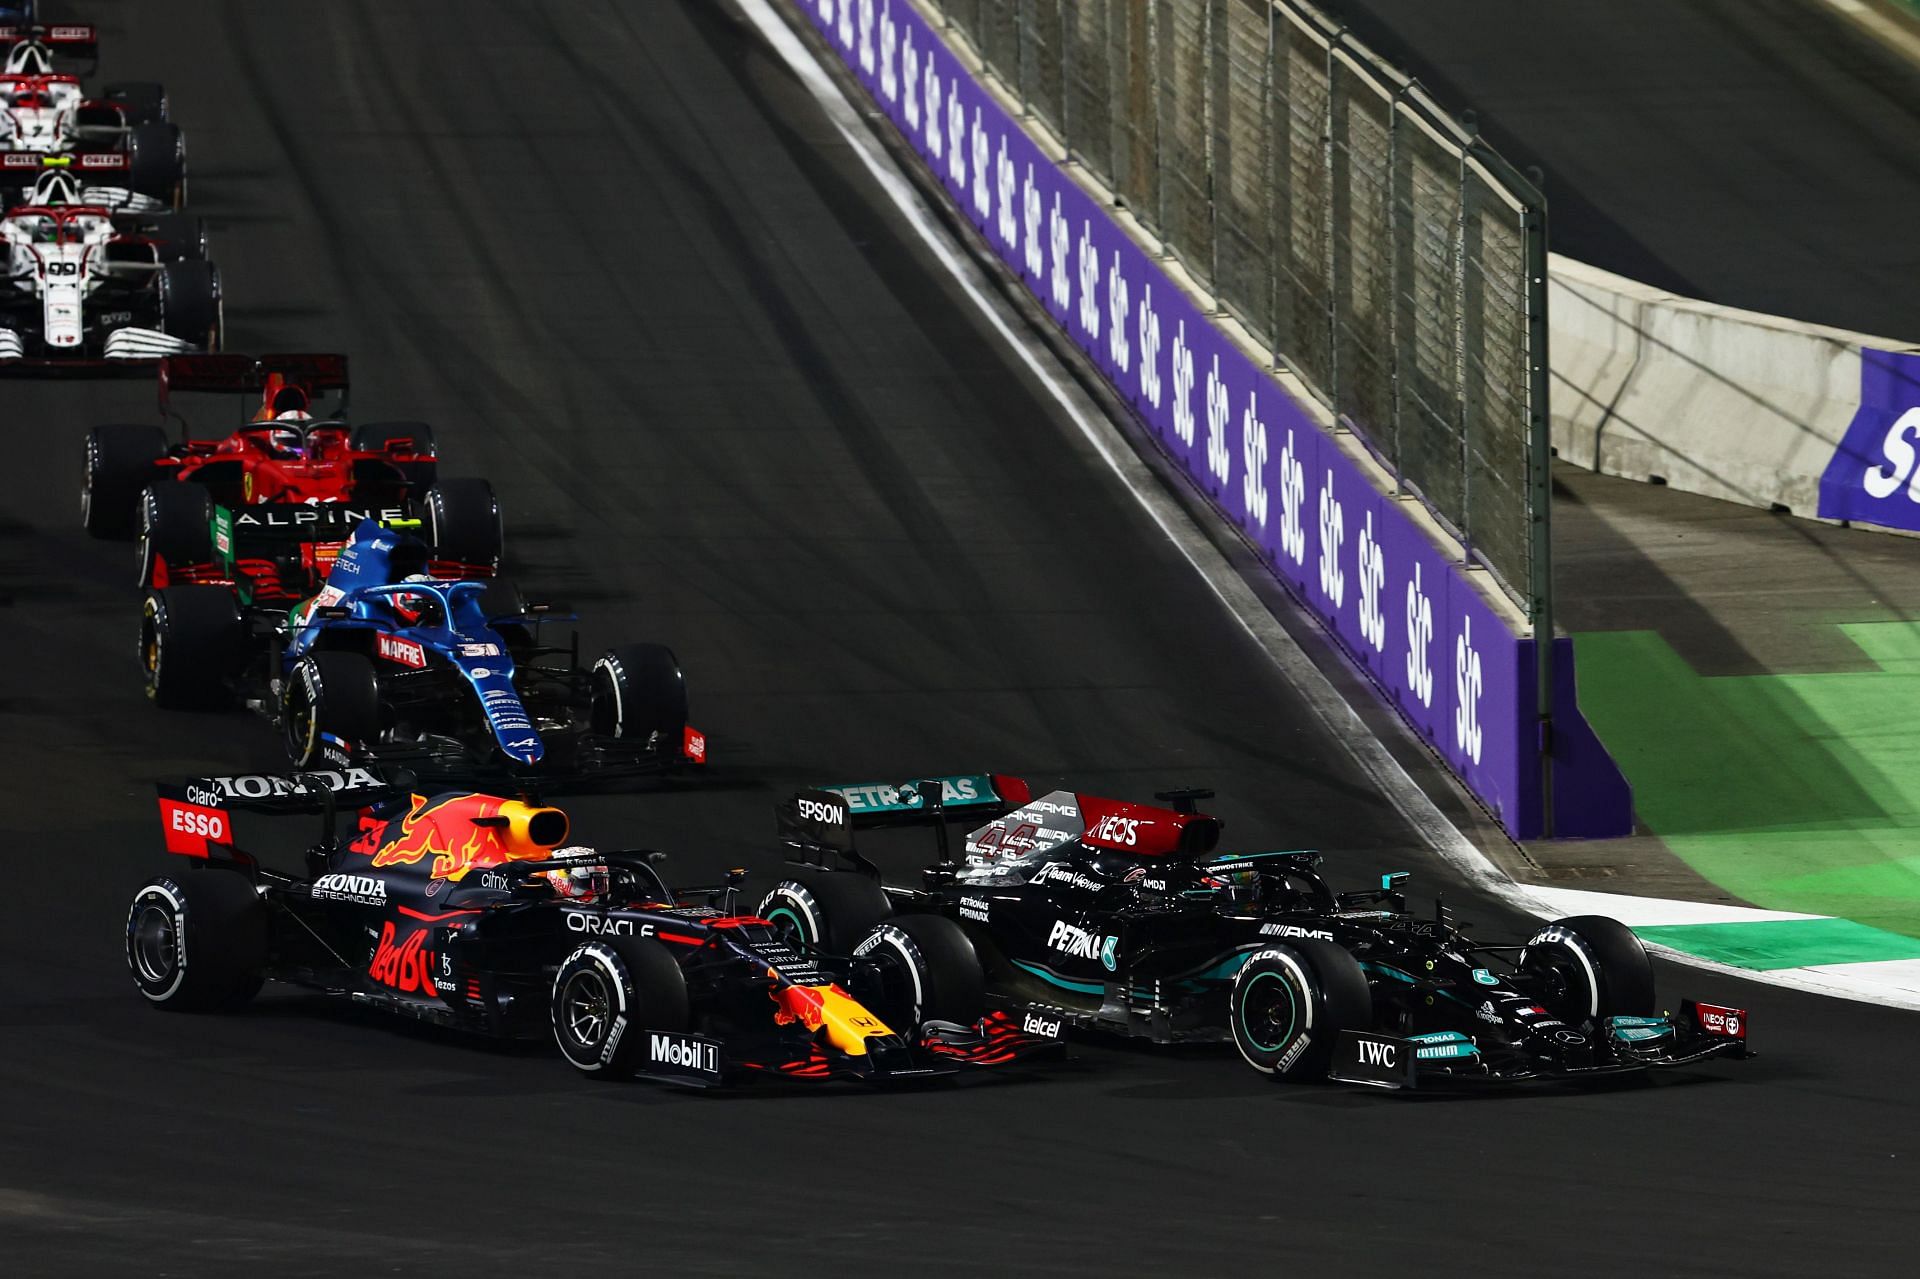 The Saudi Arabian GP featured an action-packed race last season